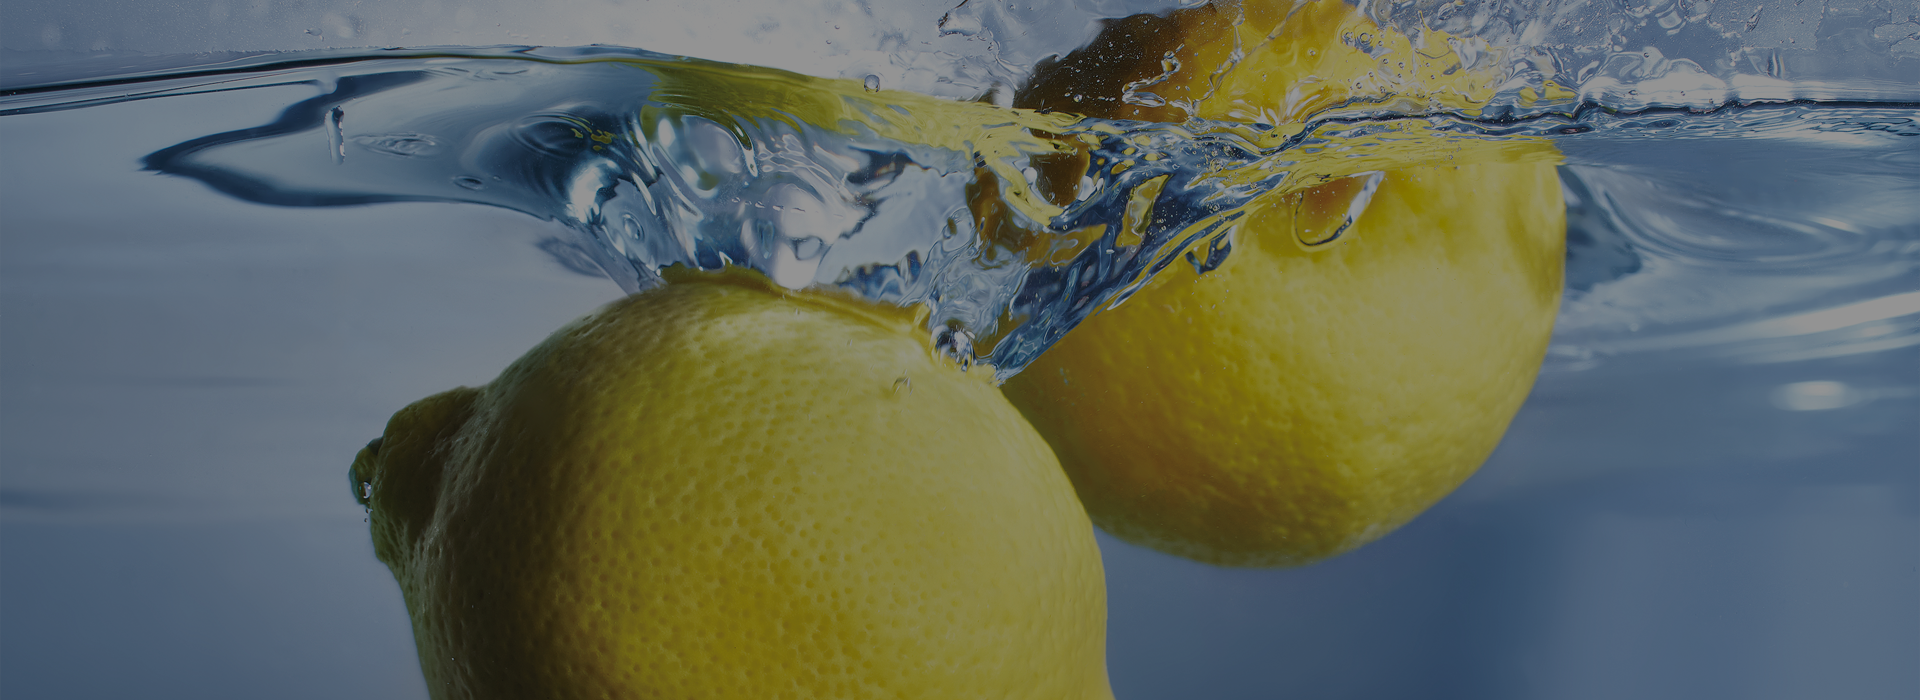 Lemons under water